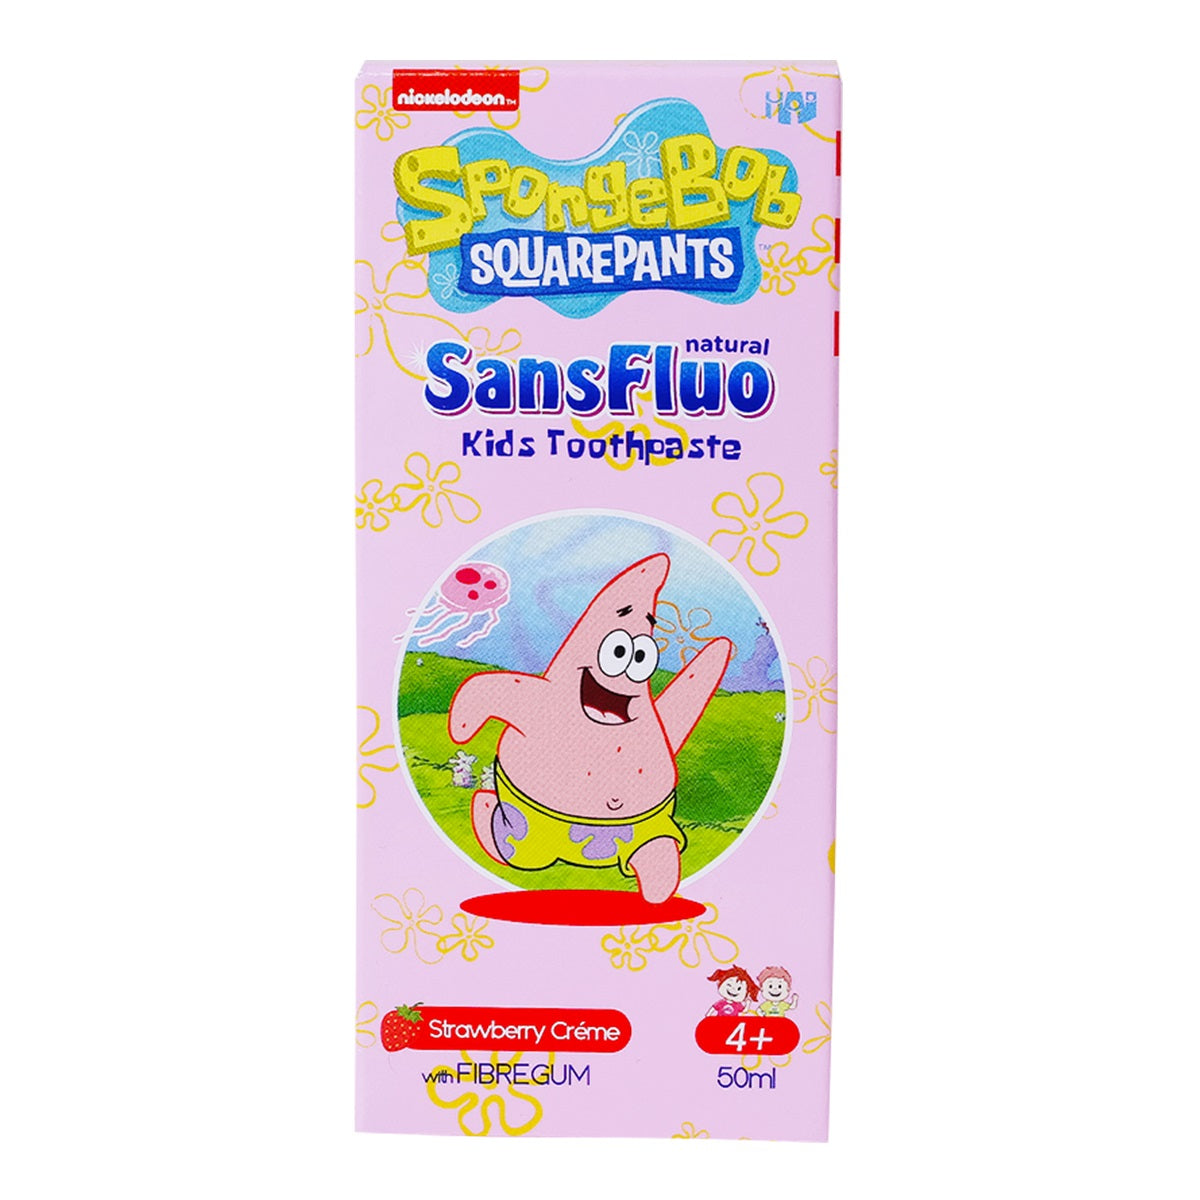 SansFluo Natural Kids Toothpaste